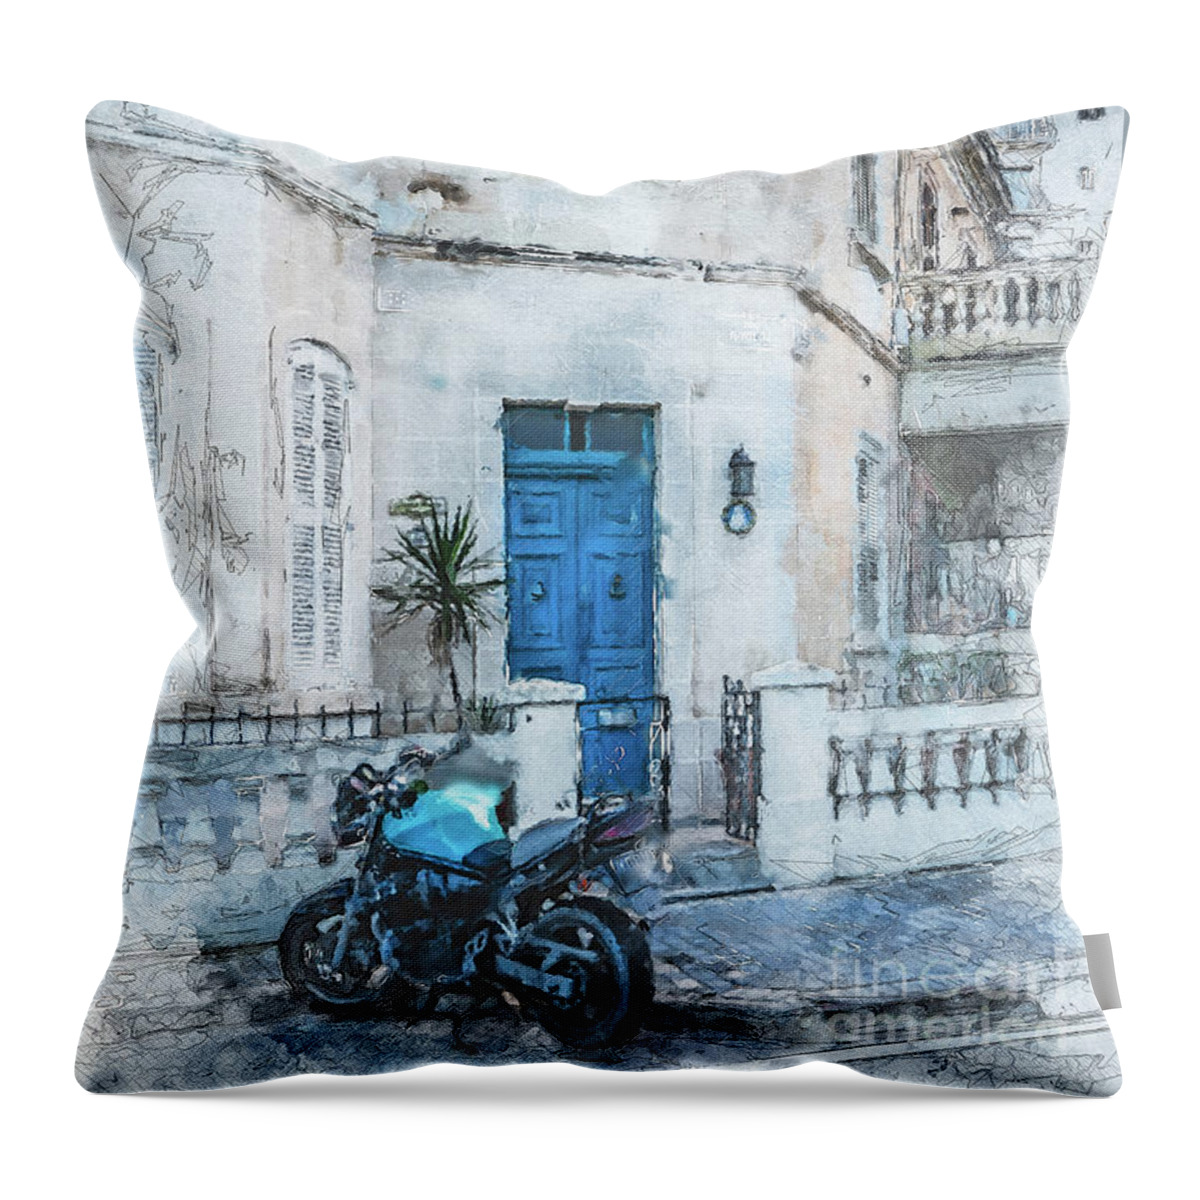 Malta Throw Pillow featuring the digital art Malta St. Julians #3 by Justyna Jaszke JBJart